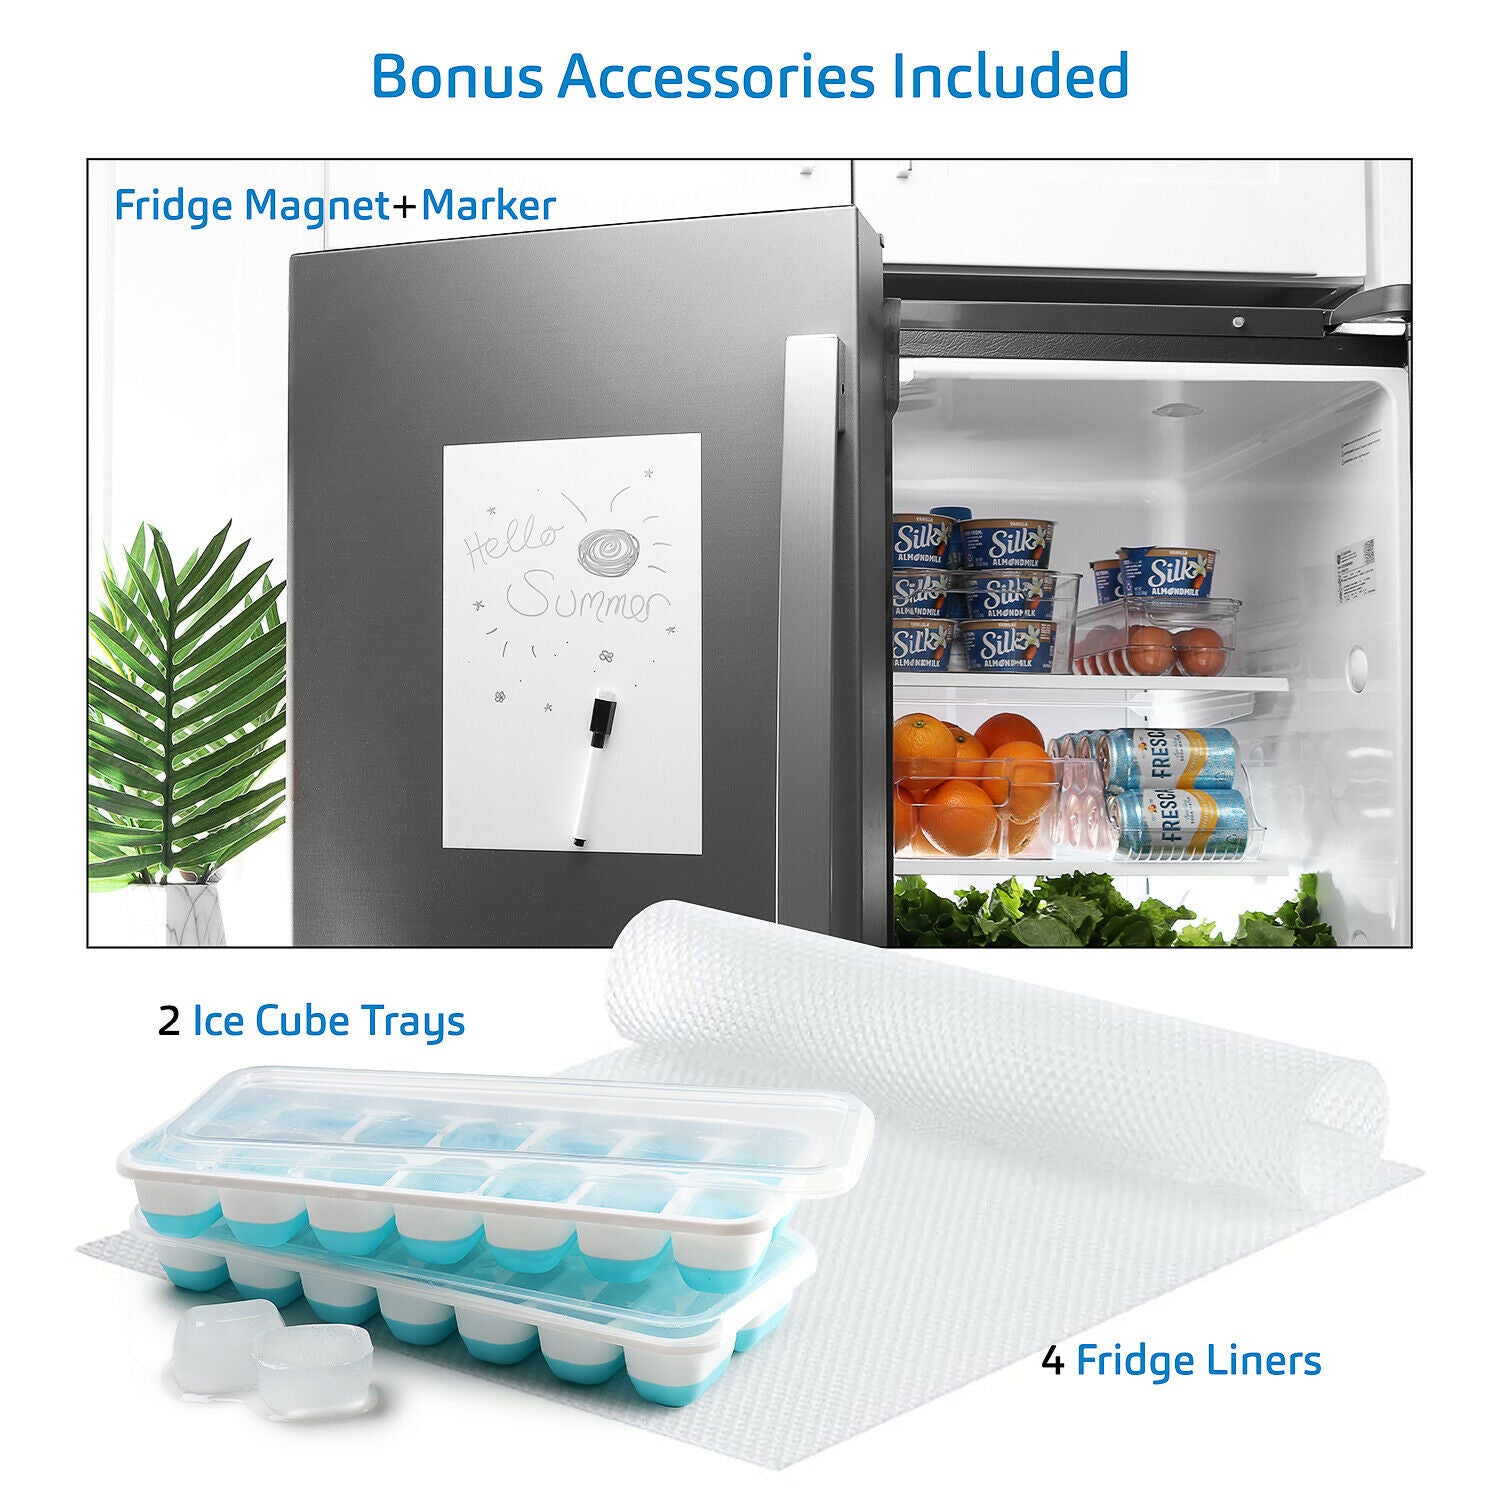 Refrigerator Accessories - Refrigerator Organizer Storage Bins - Clear Plastic Containers 14pcs -